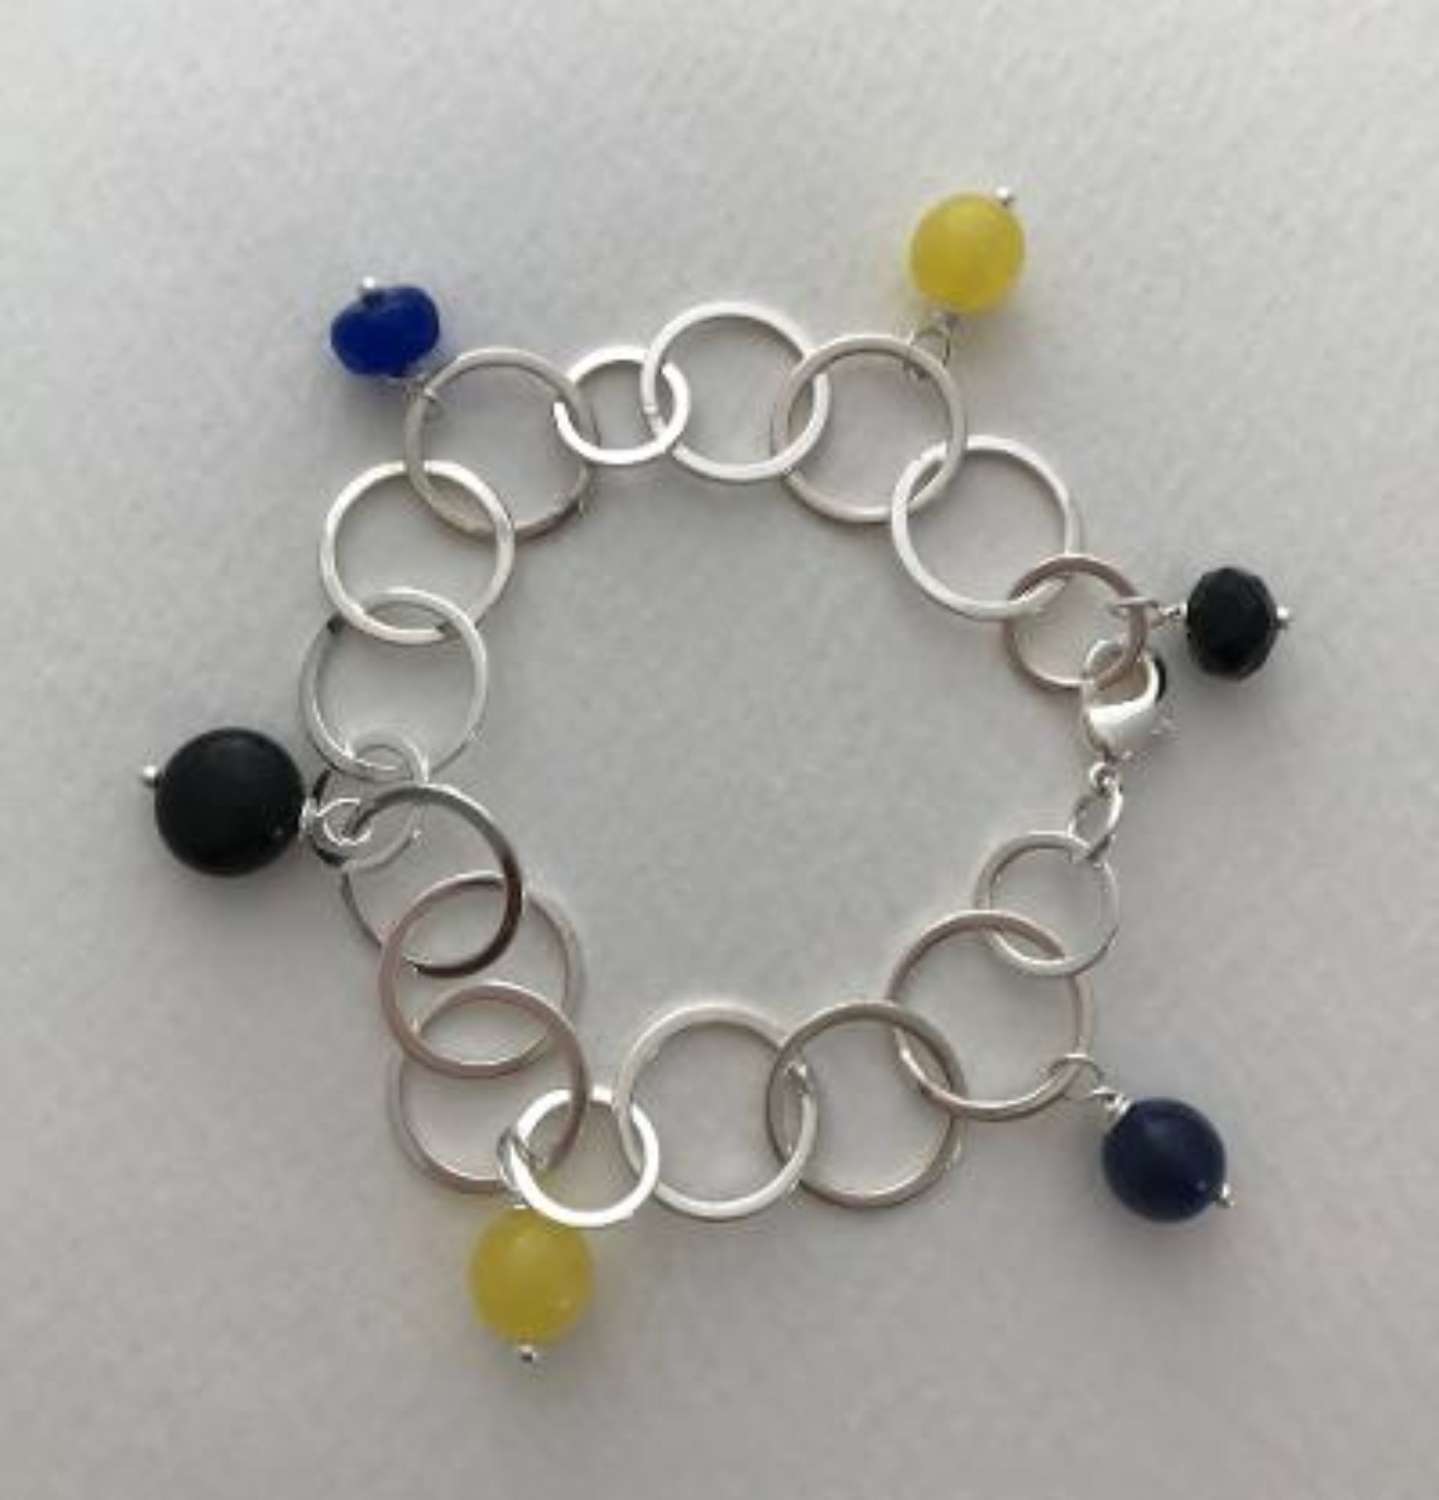 Charm bracelet - navy/yellow